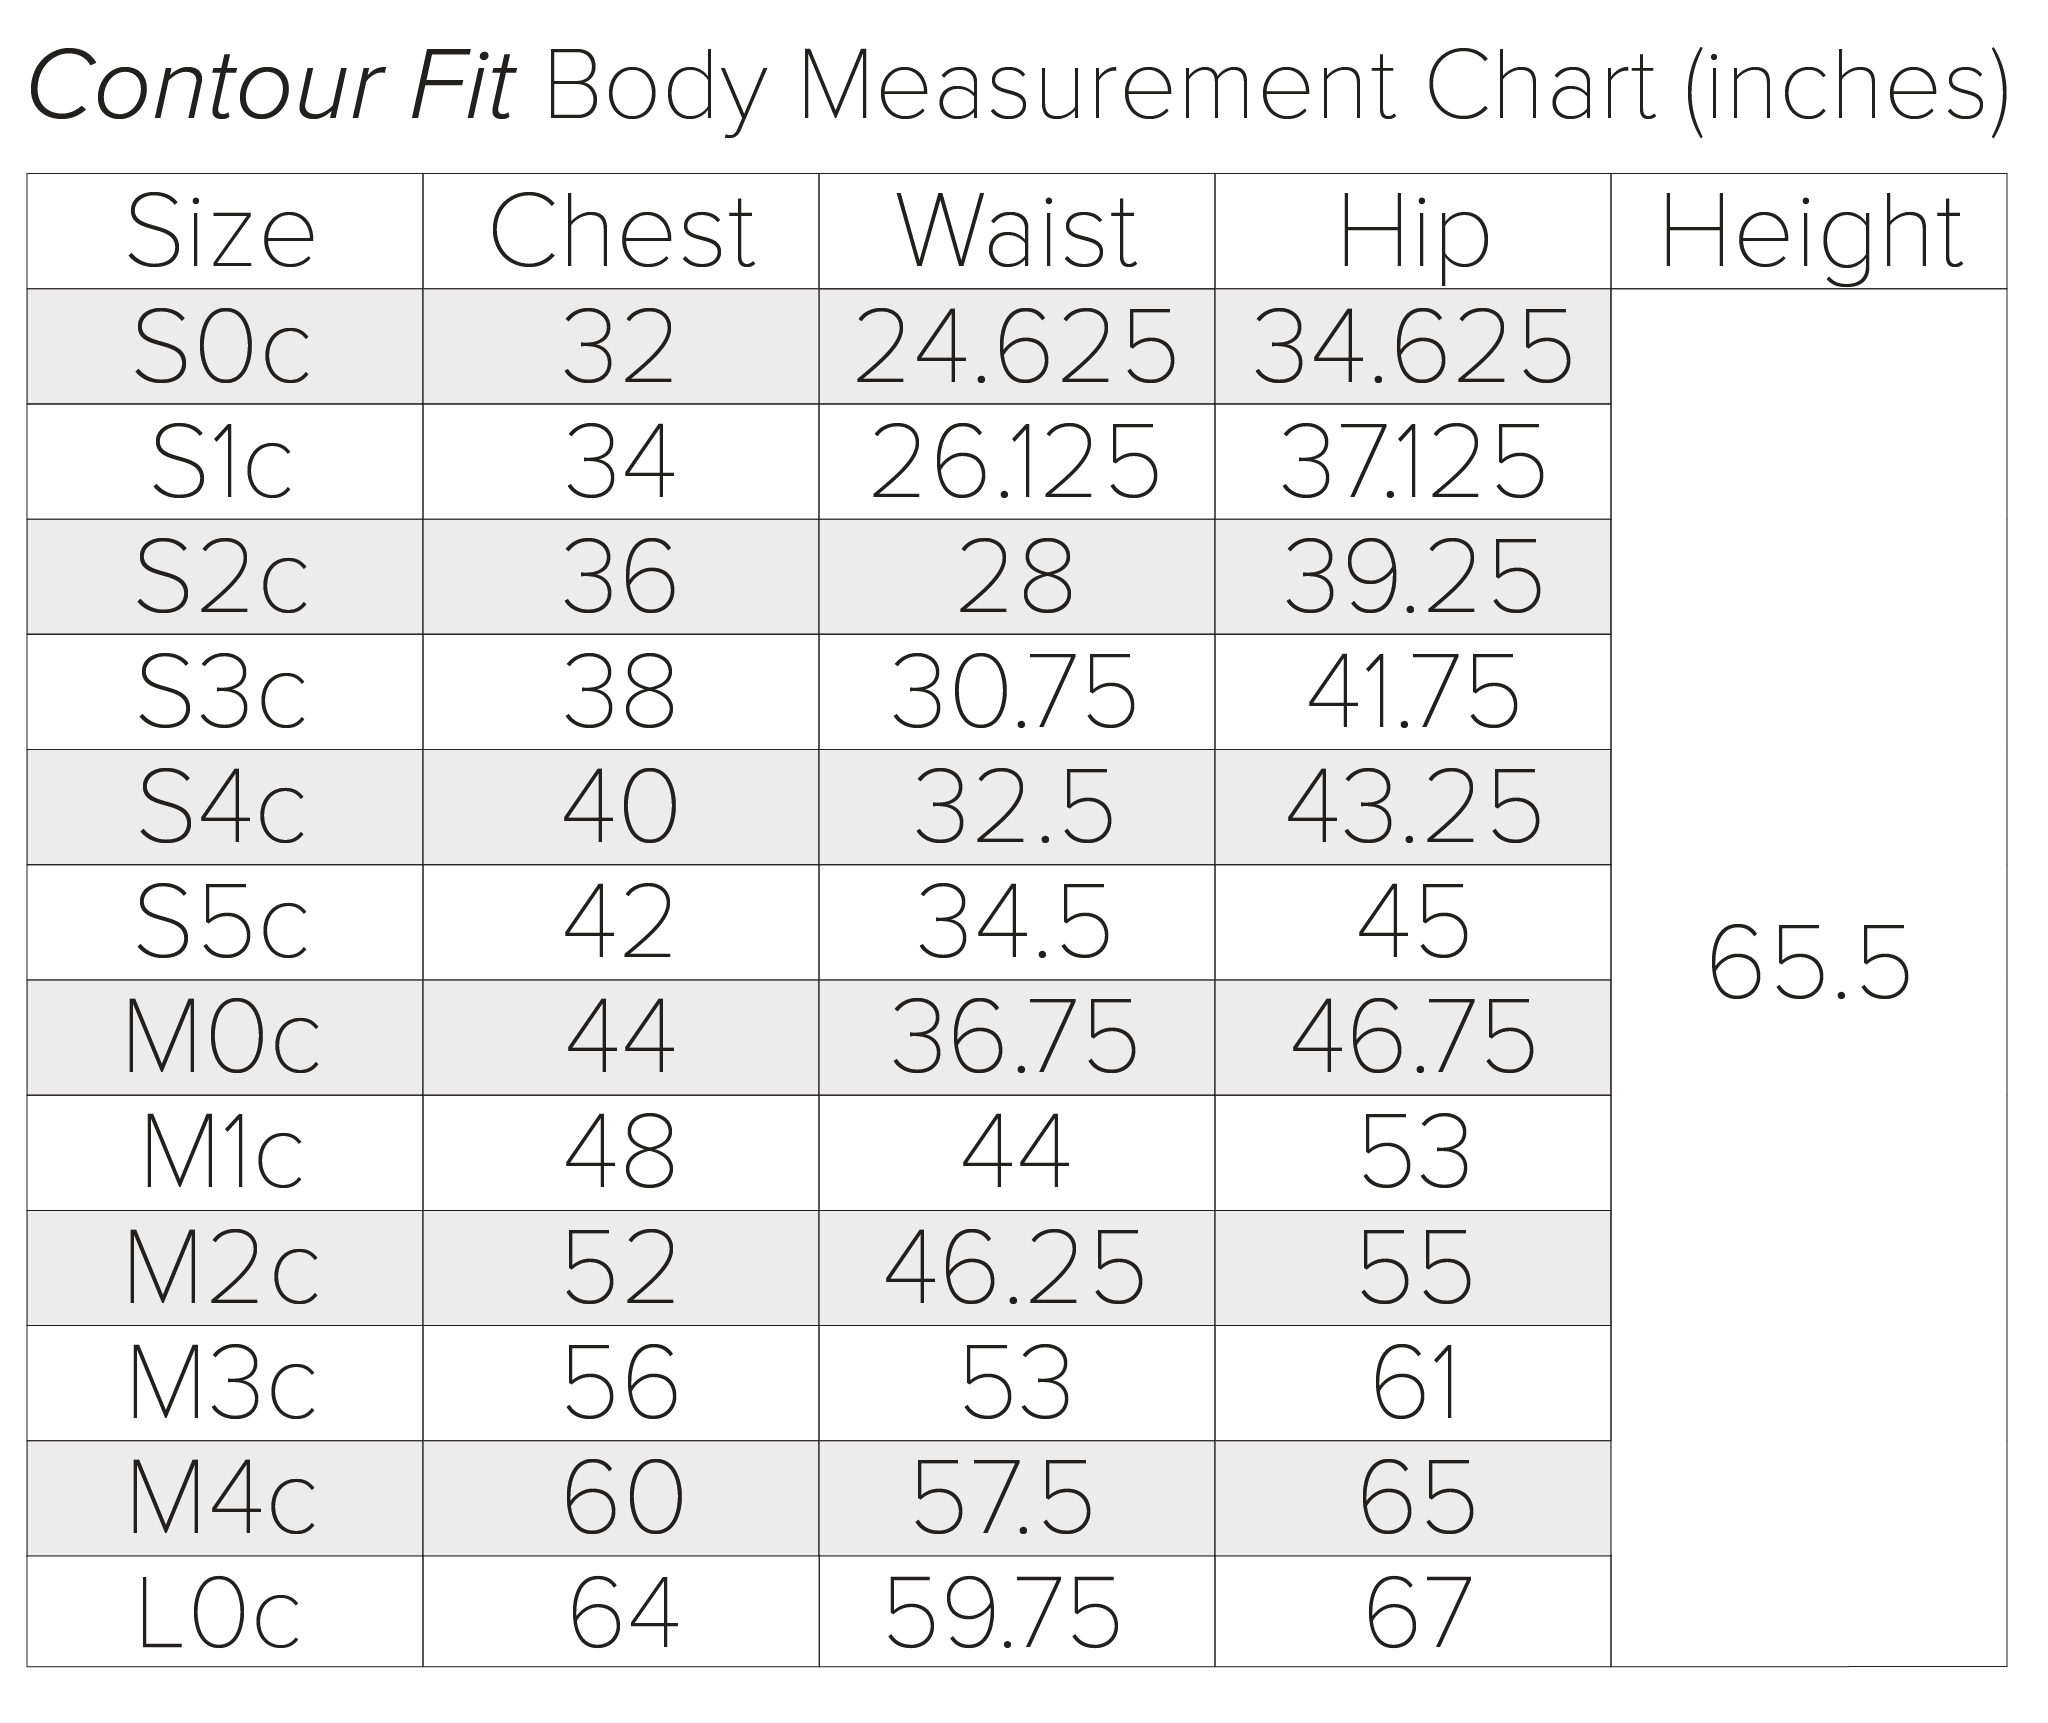 body measurement chart for contour body frames